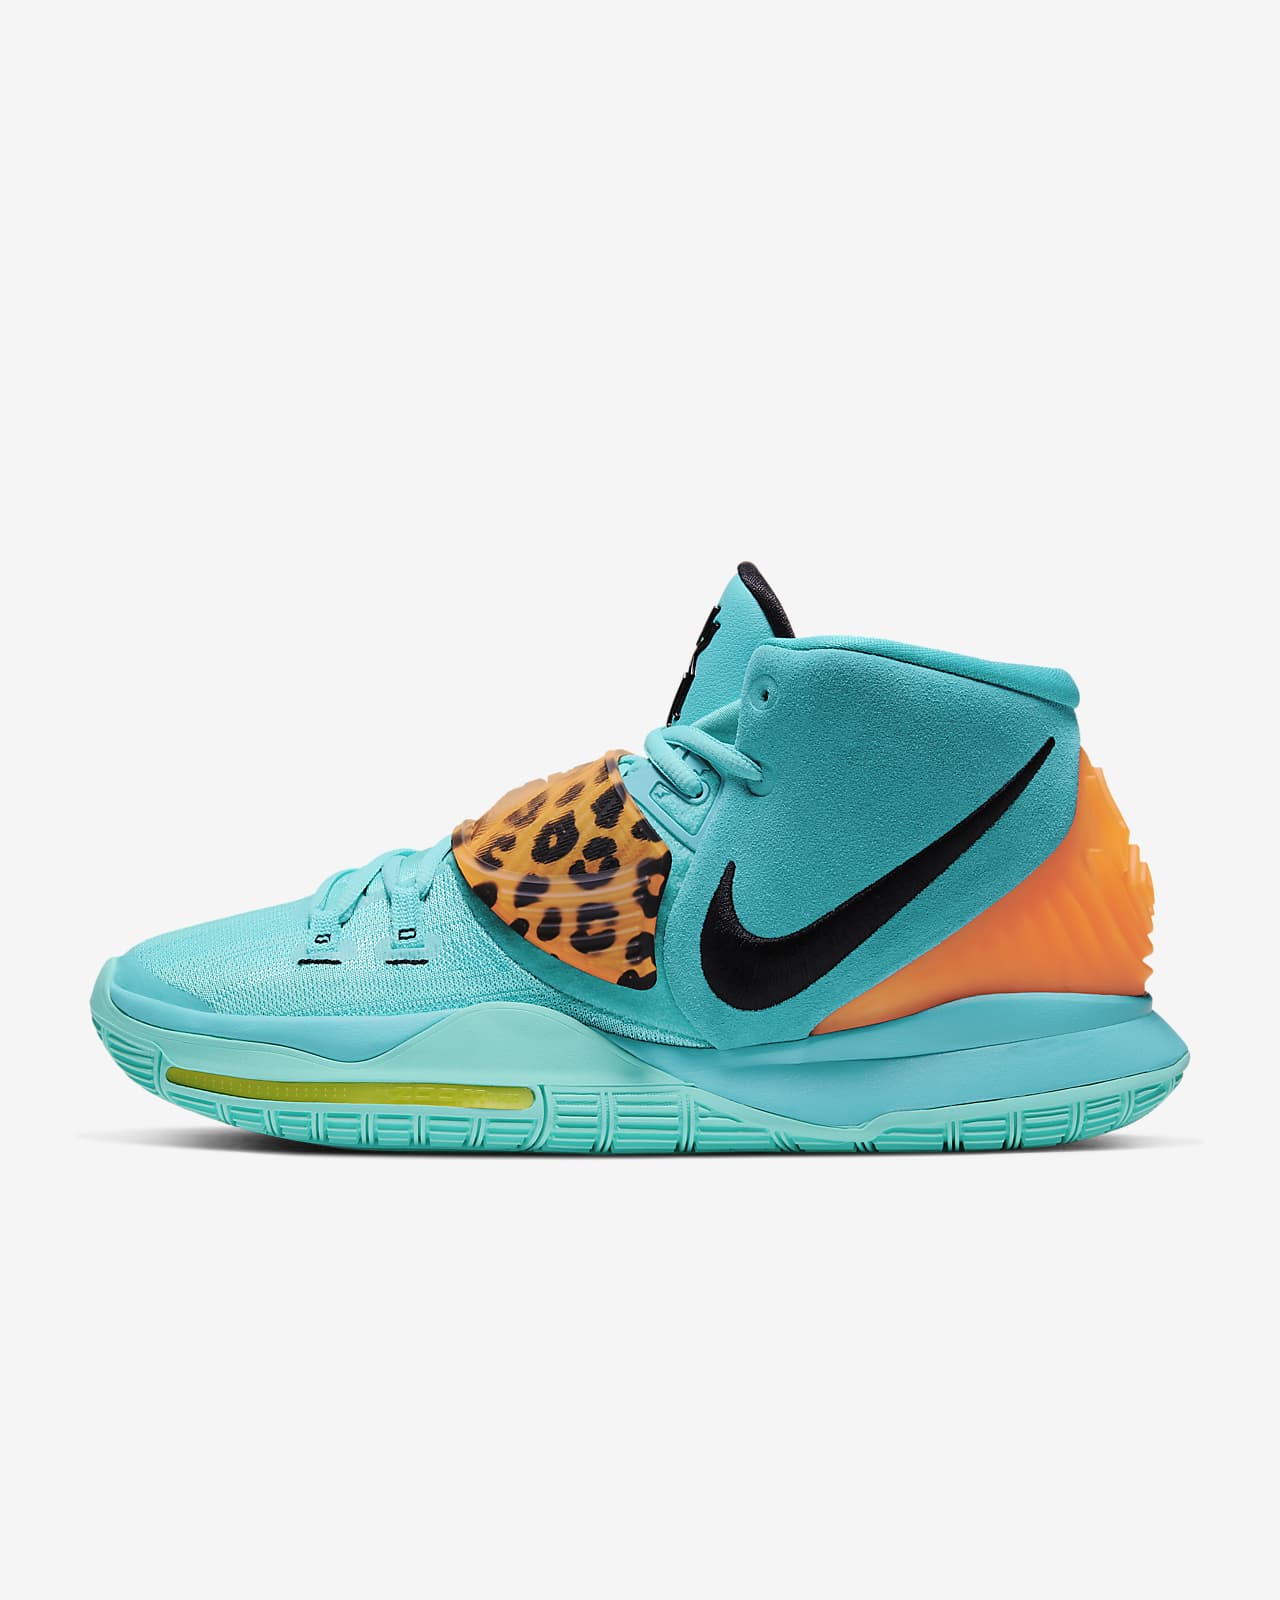 Kyrie 6 Basketball Shoe. Nike SA